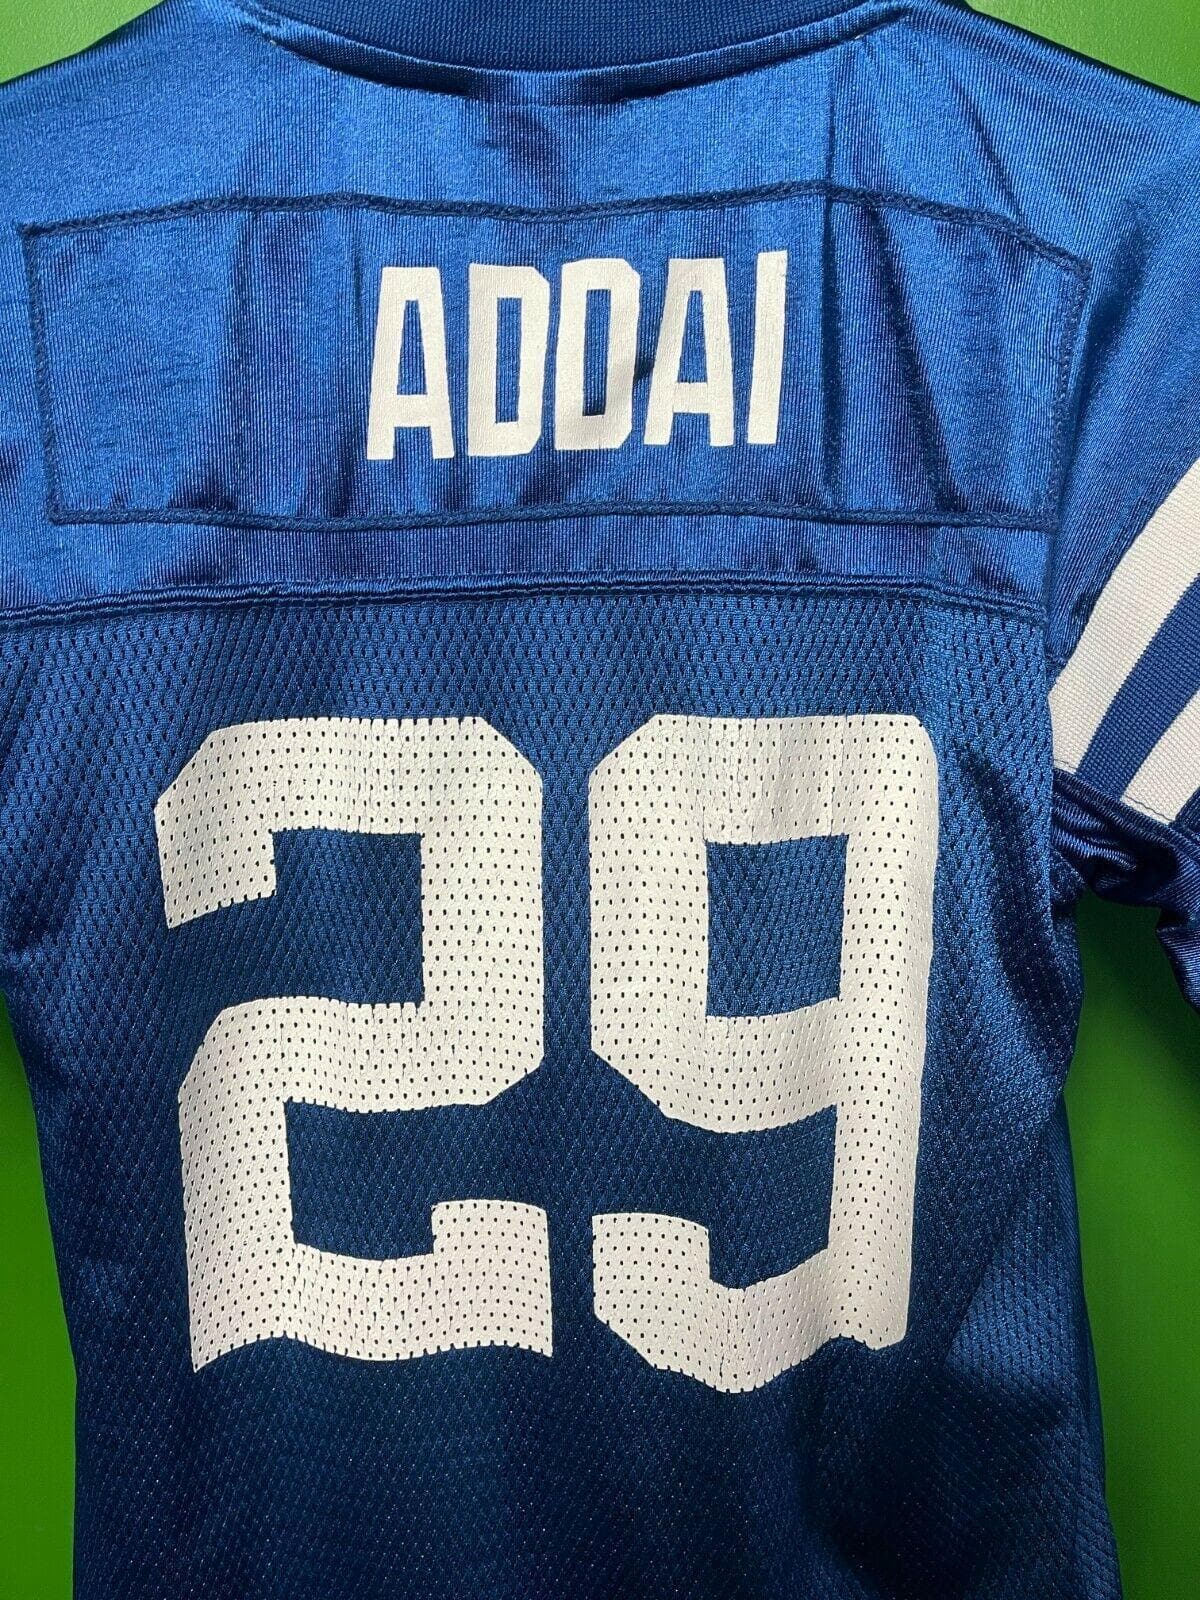 NFL Indianapolis Colts Joseph Addai #29 Reebok Jersey Youth Large 14-16